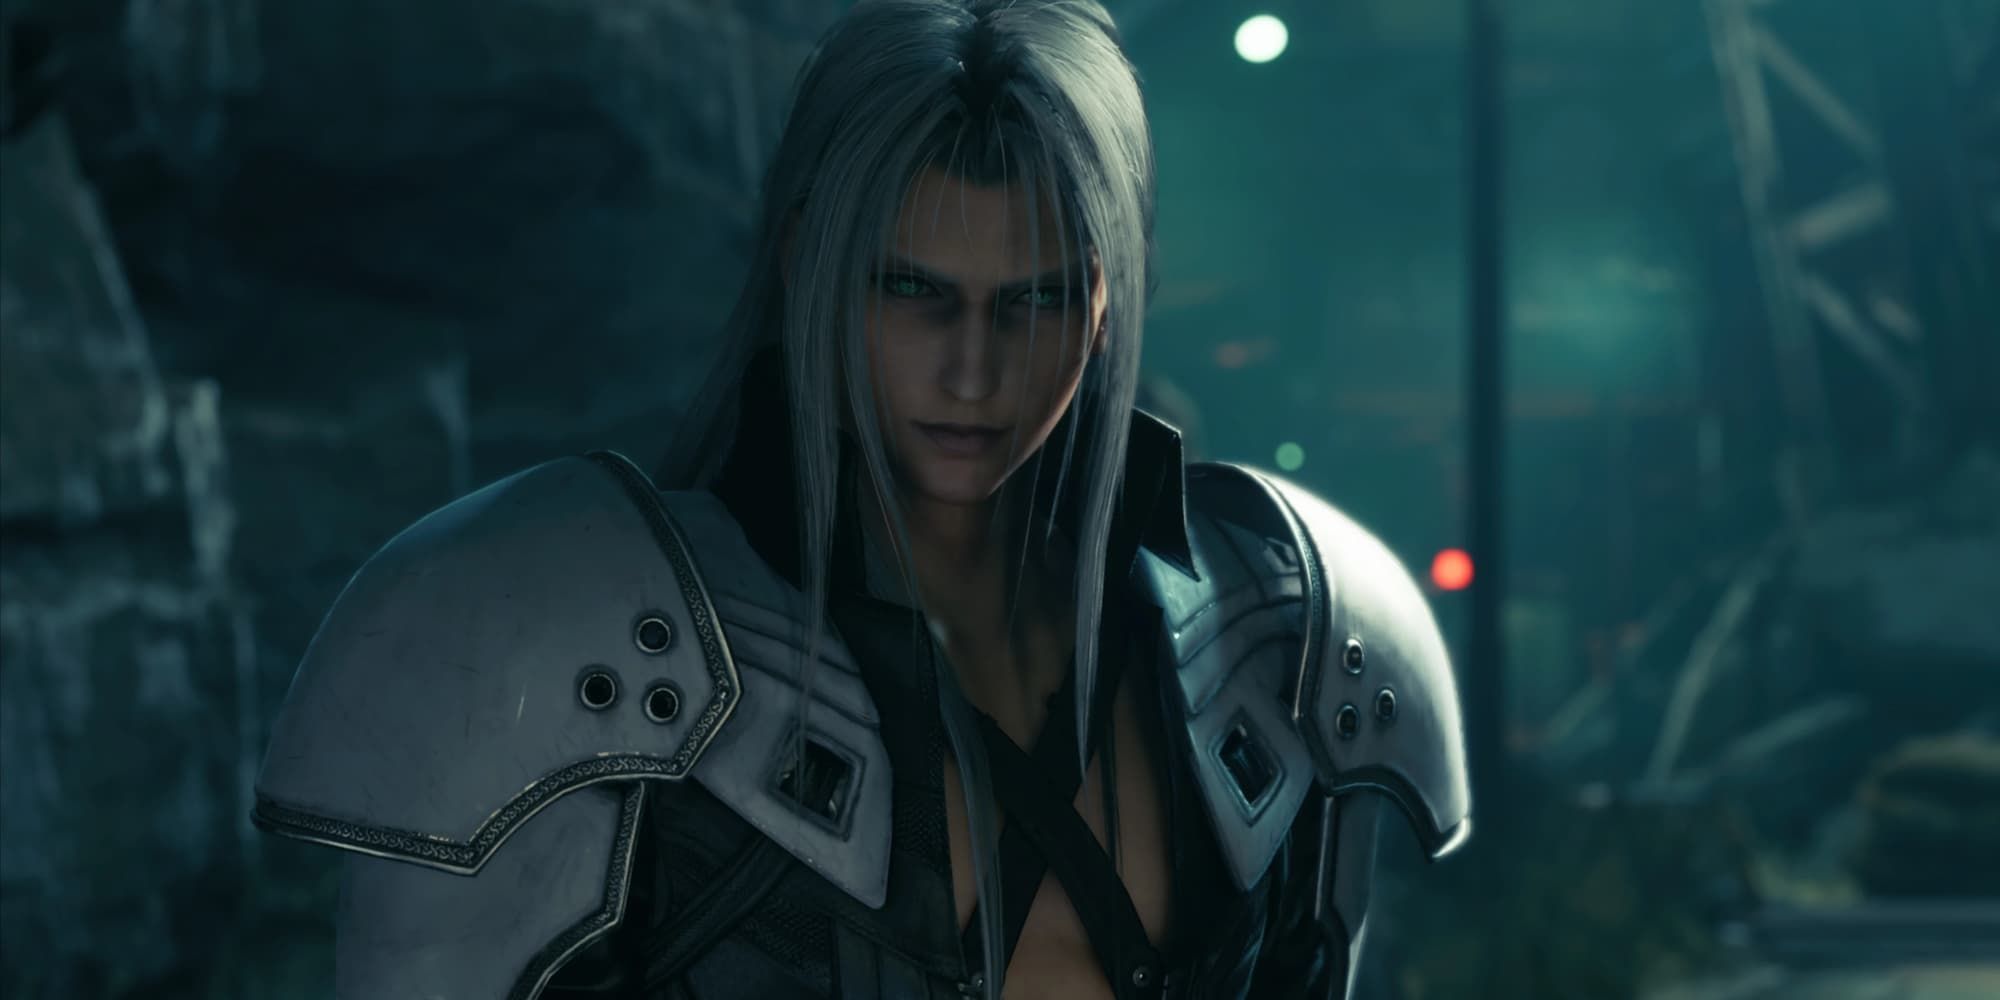 Image depicting Sephiroth in Final Fantasy 